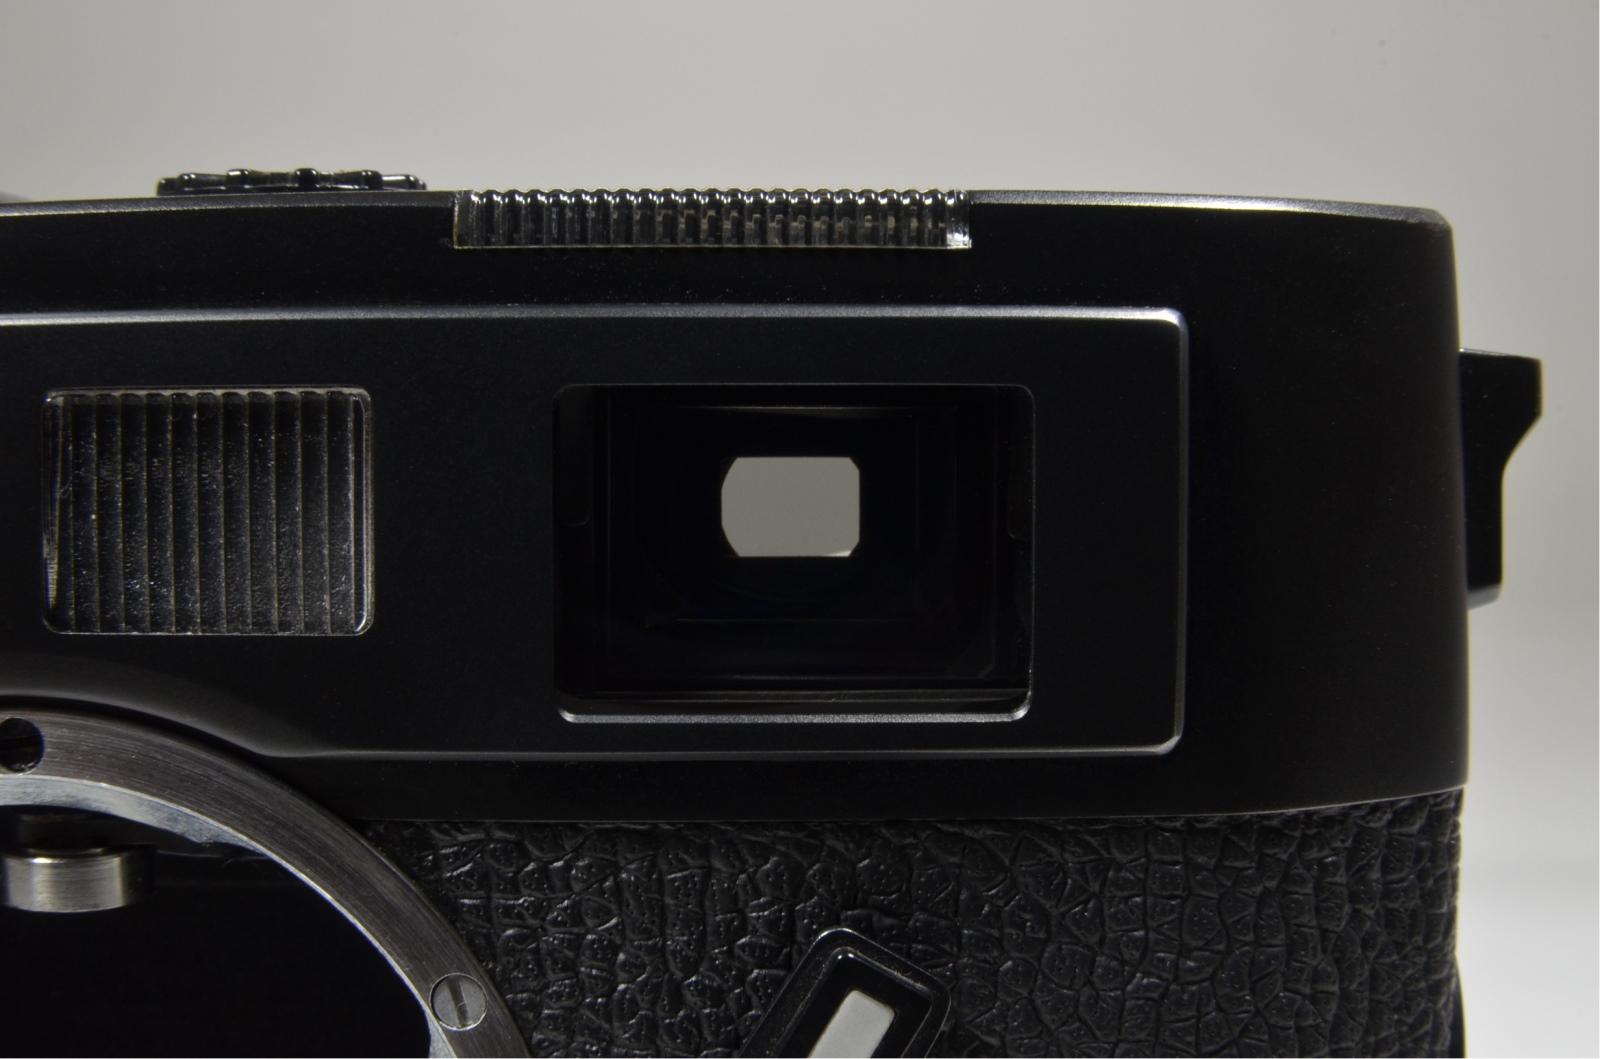 leica m5 black 3 lug year 1973 s/n 1376449 rangefinder camera